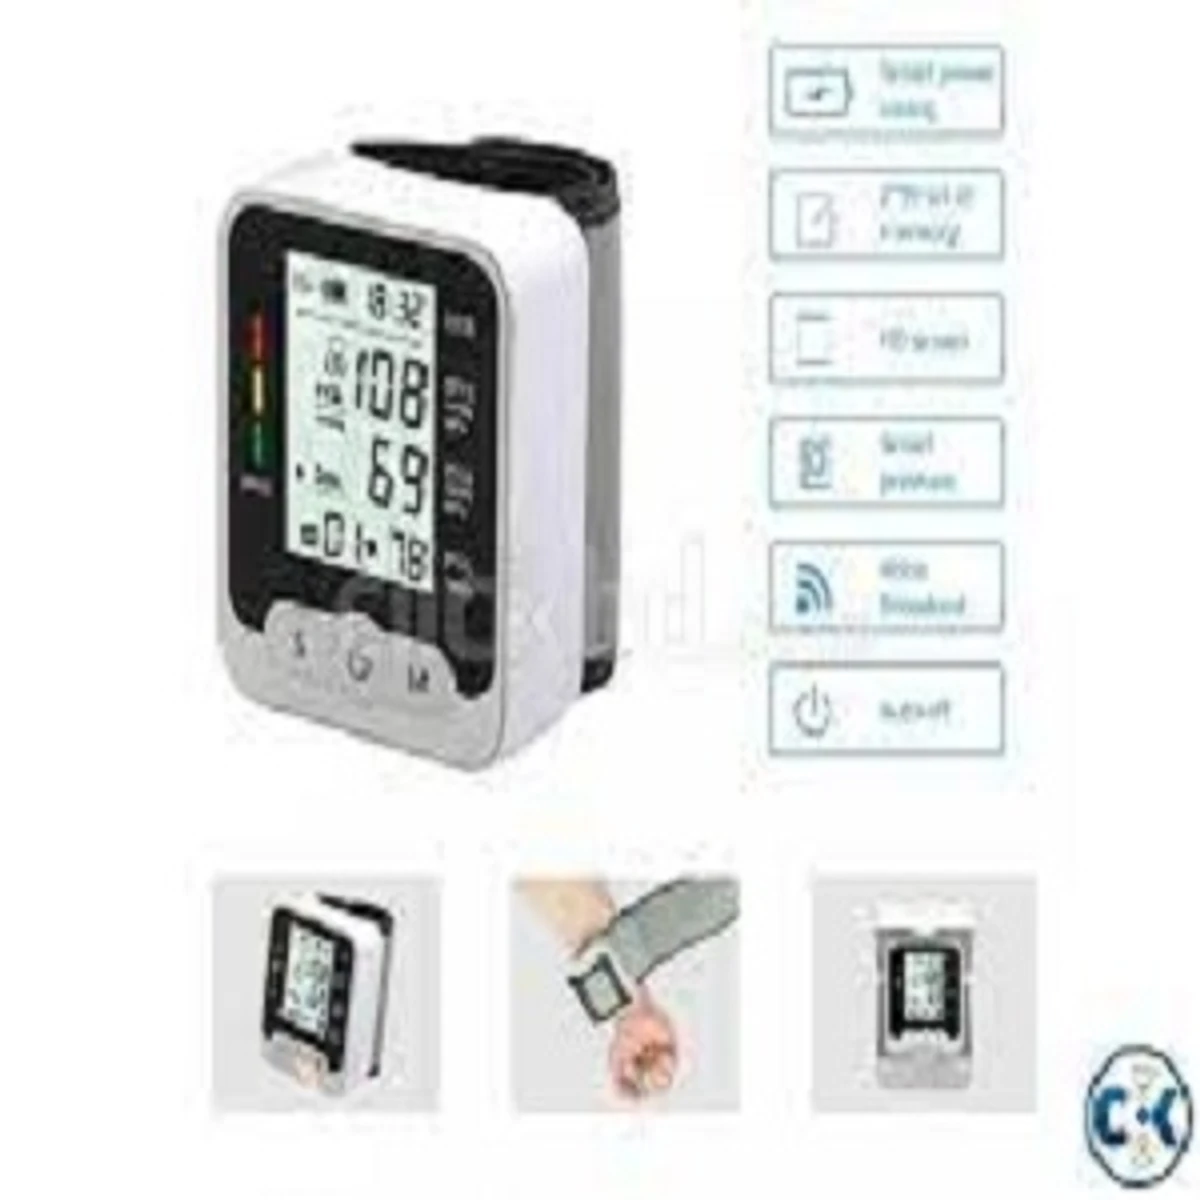 Automatic Digital Wrist Blood Pressure Monitor with Heart Rate Monitor/Wrist Digital Blood Pressure Monitor/Wrist type Digital sphygmomanometer